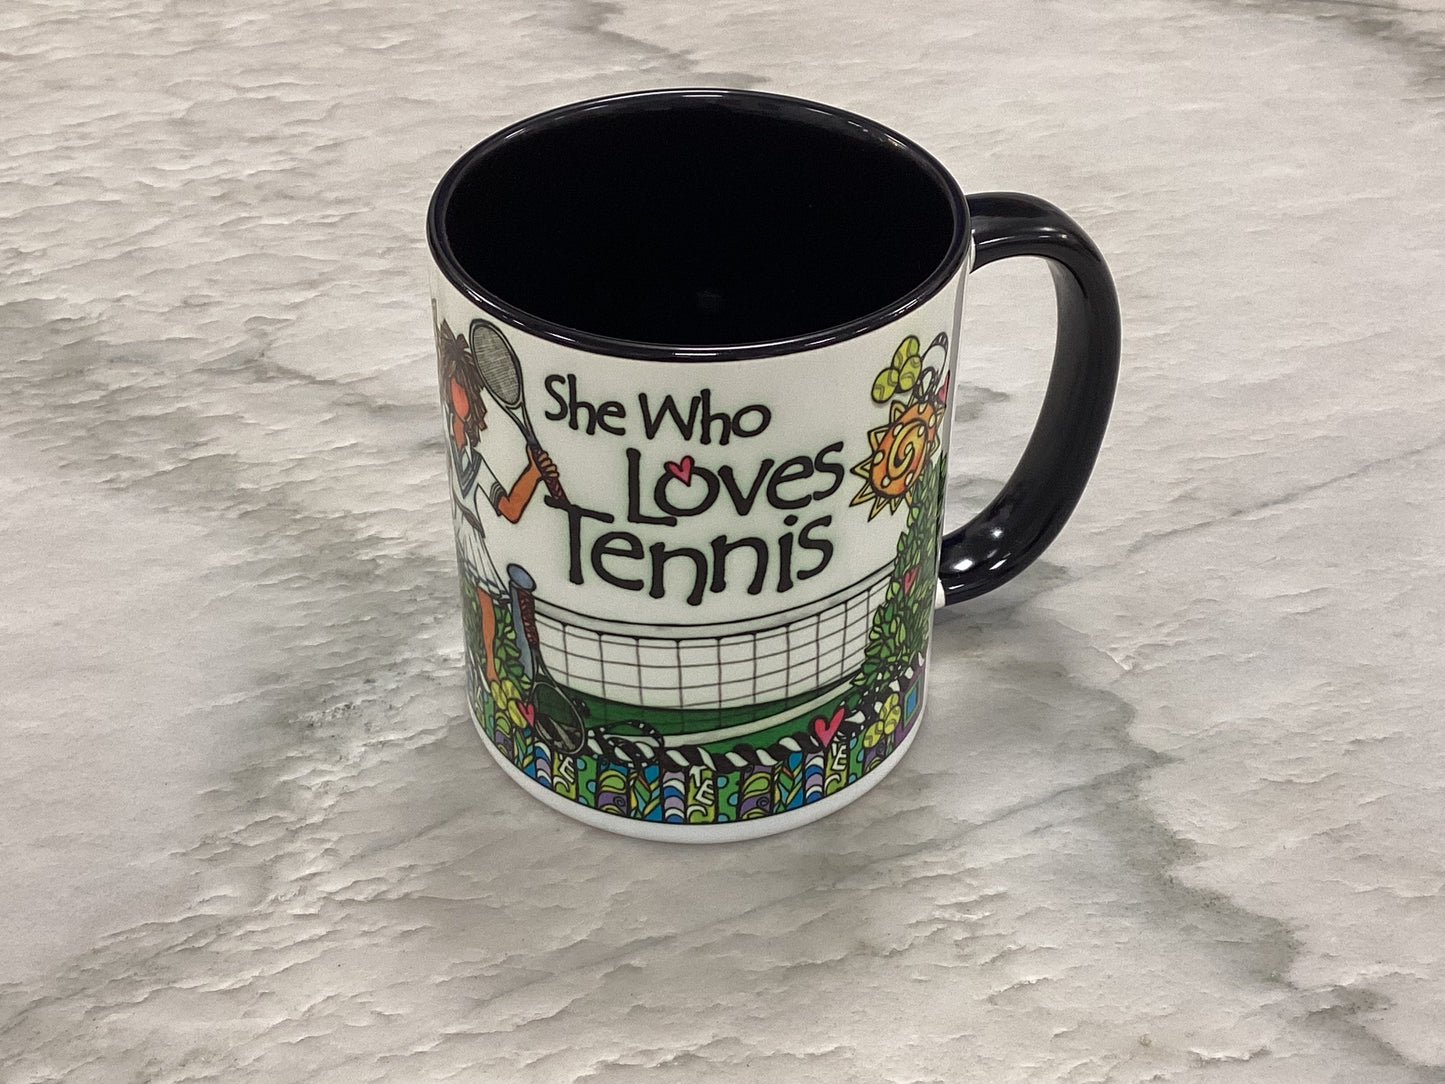 Tennis Ceramic Mug “She Who Loves Tennis”